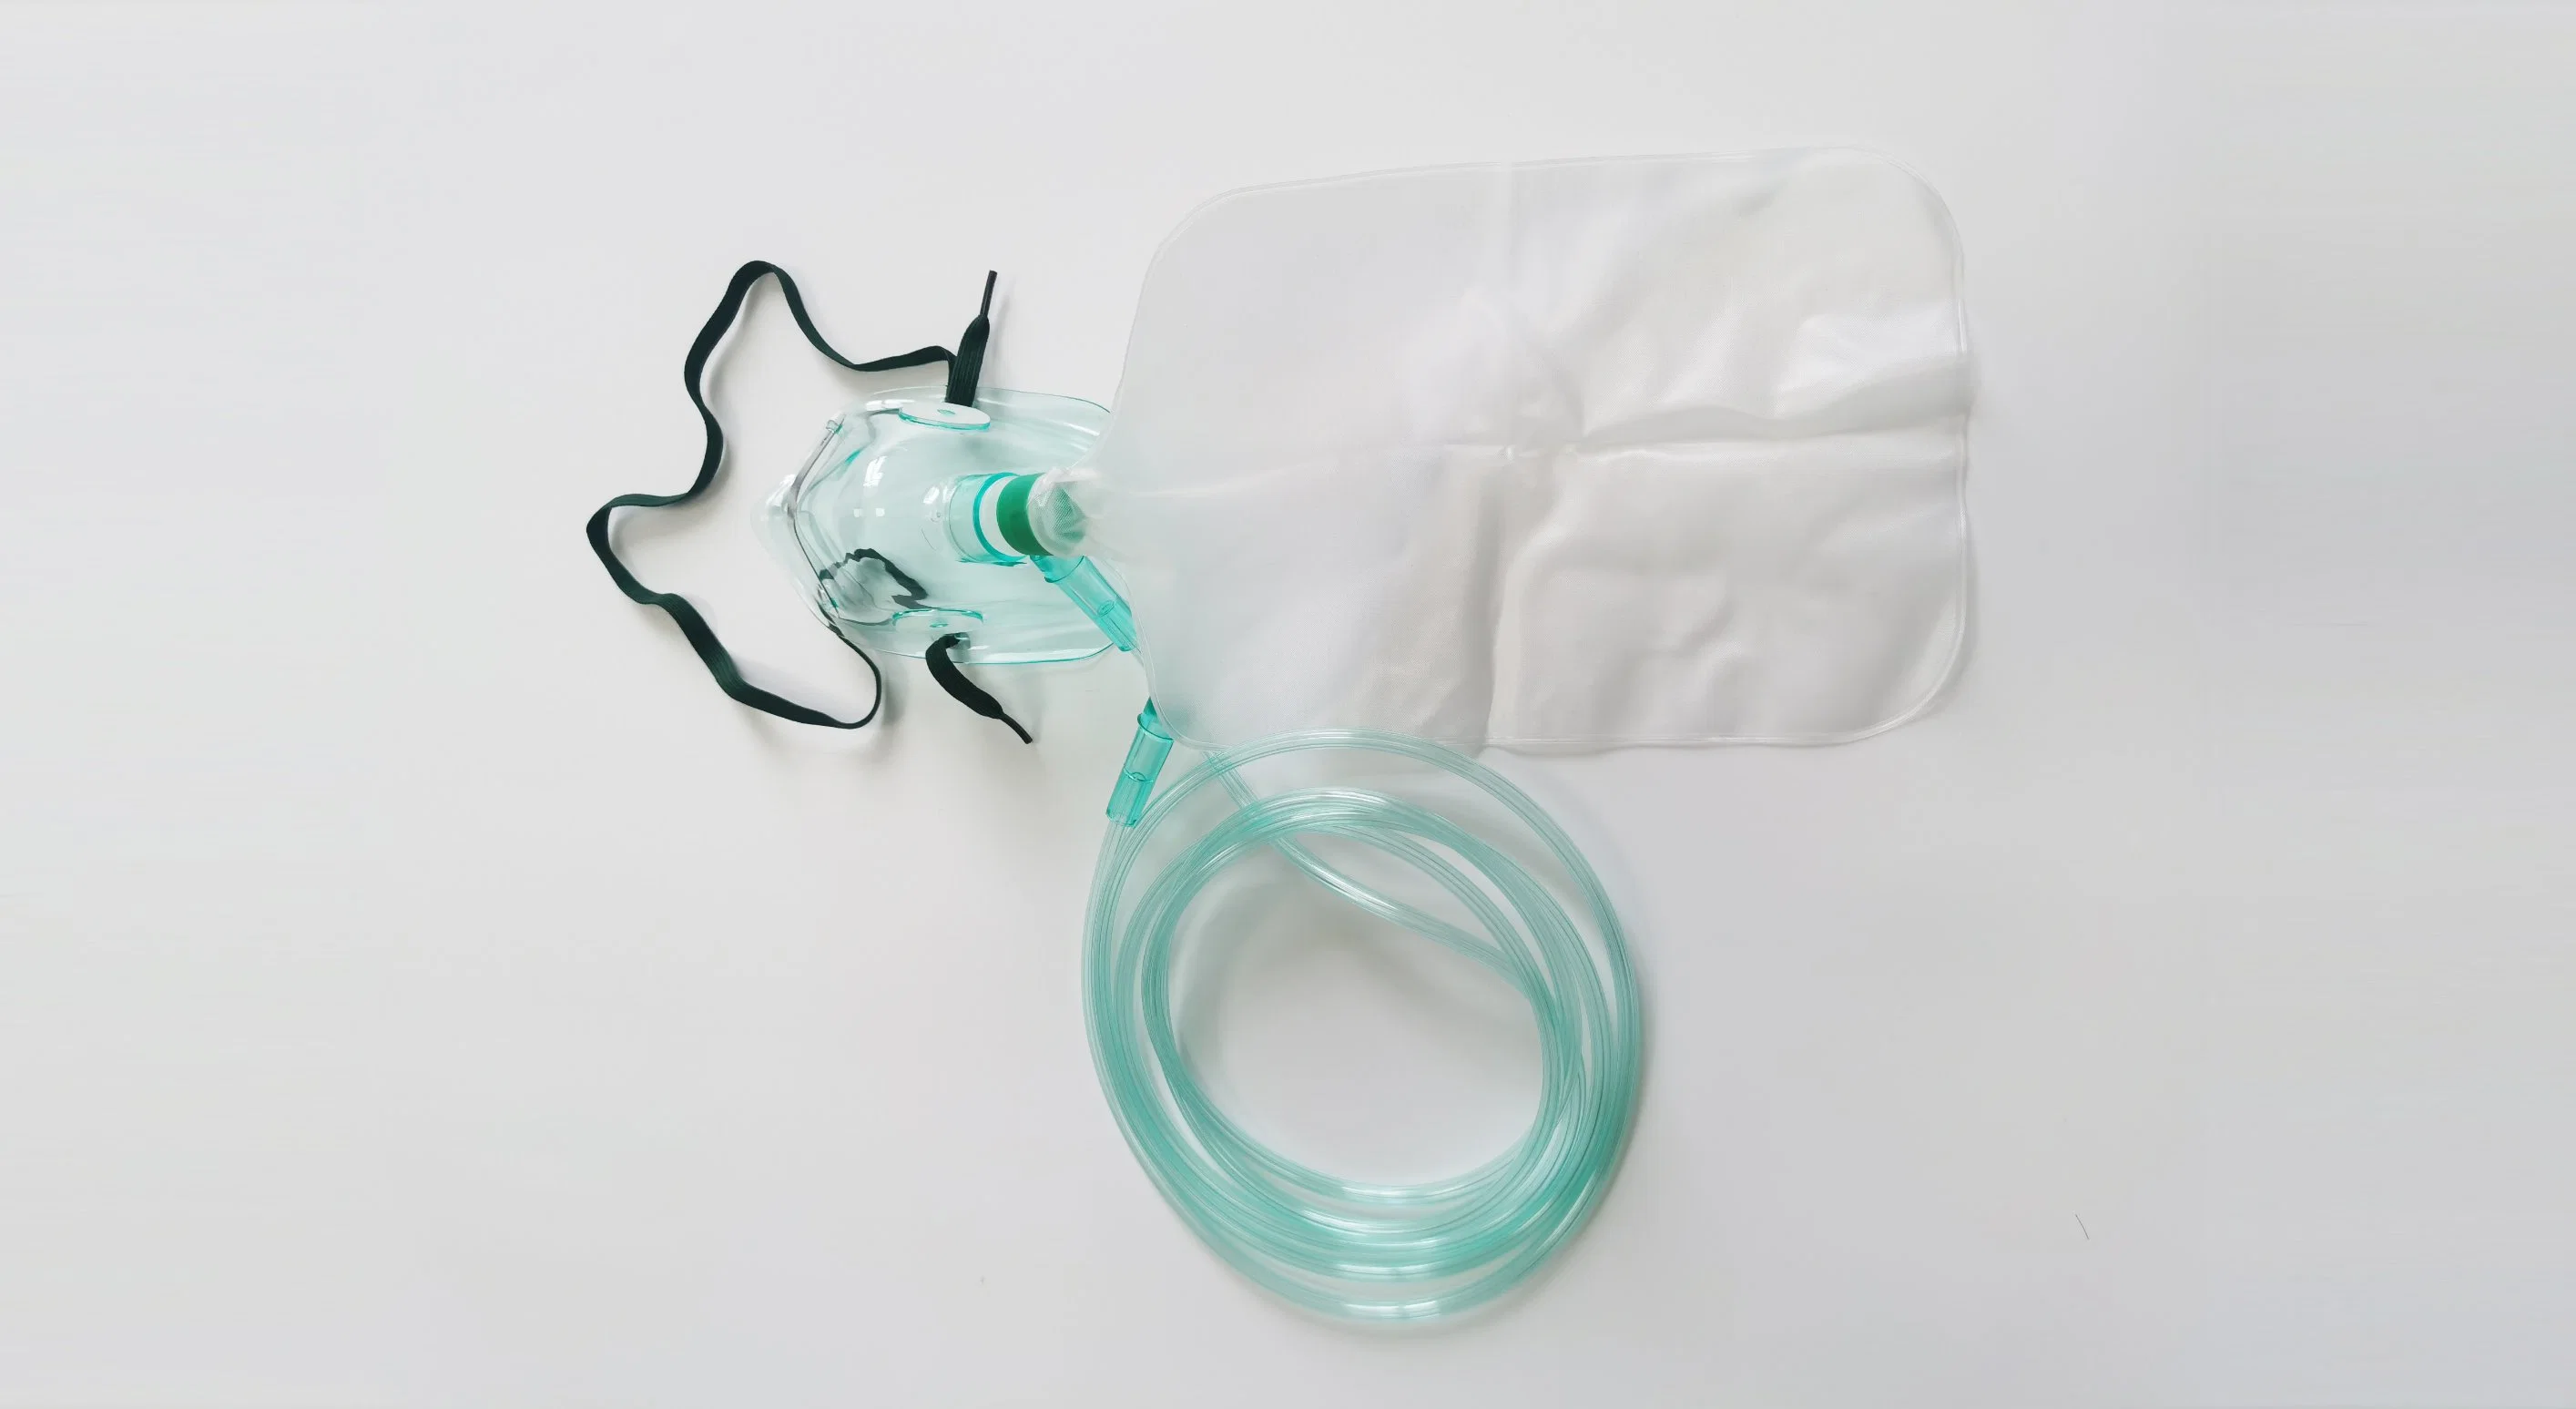 China Factory Price Oxygen Mask with Reservoir Bag Nebulizer Mask